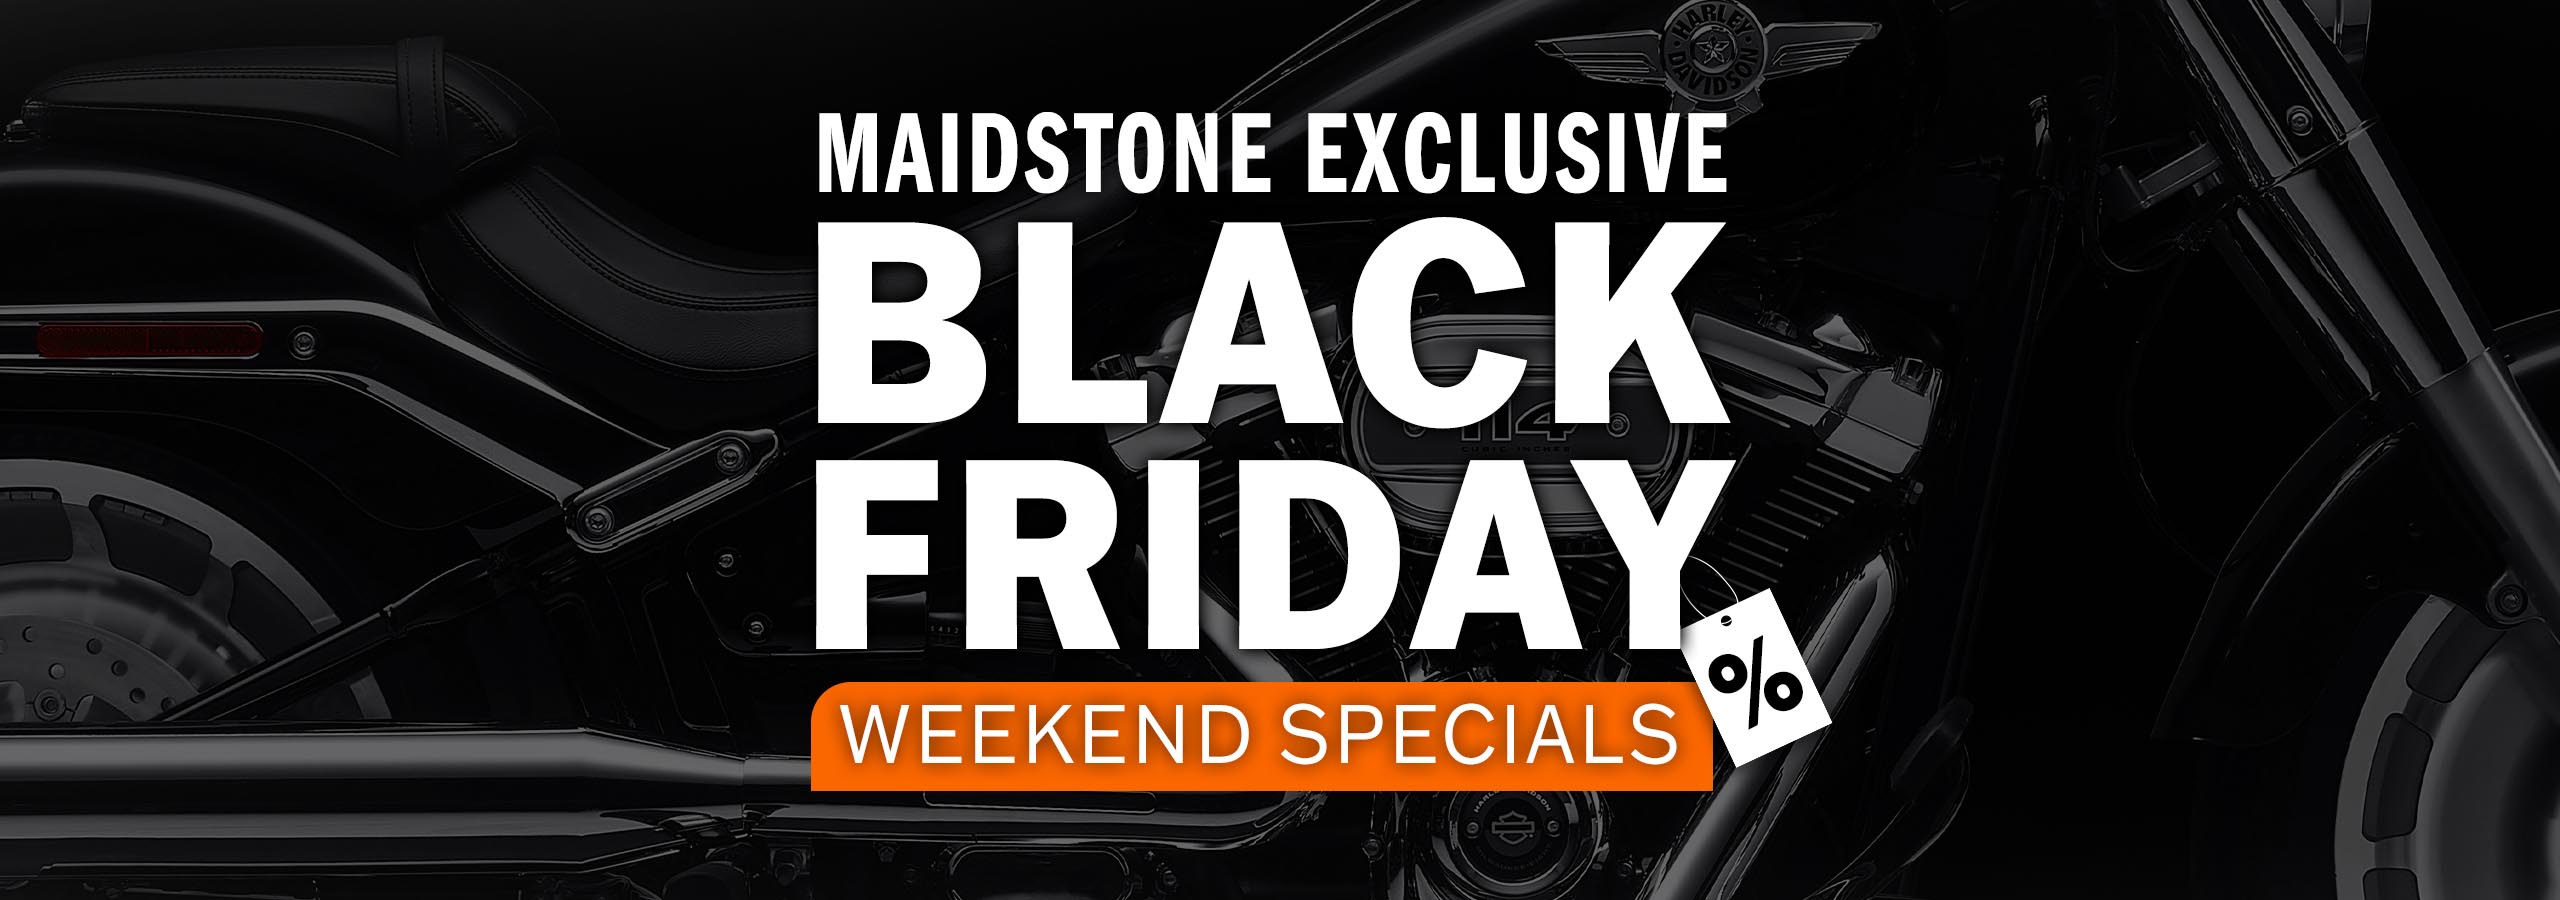 Maidstone Harley-Davidson Black Friday Weekend